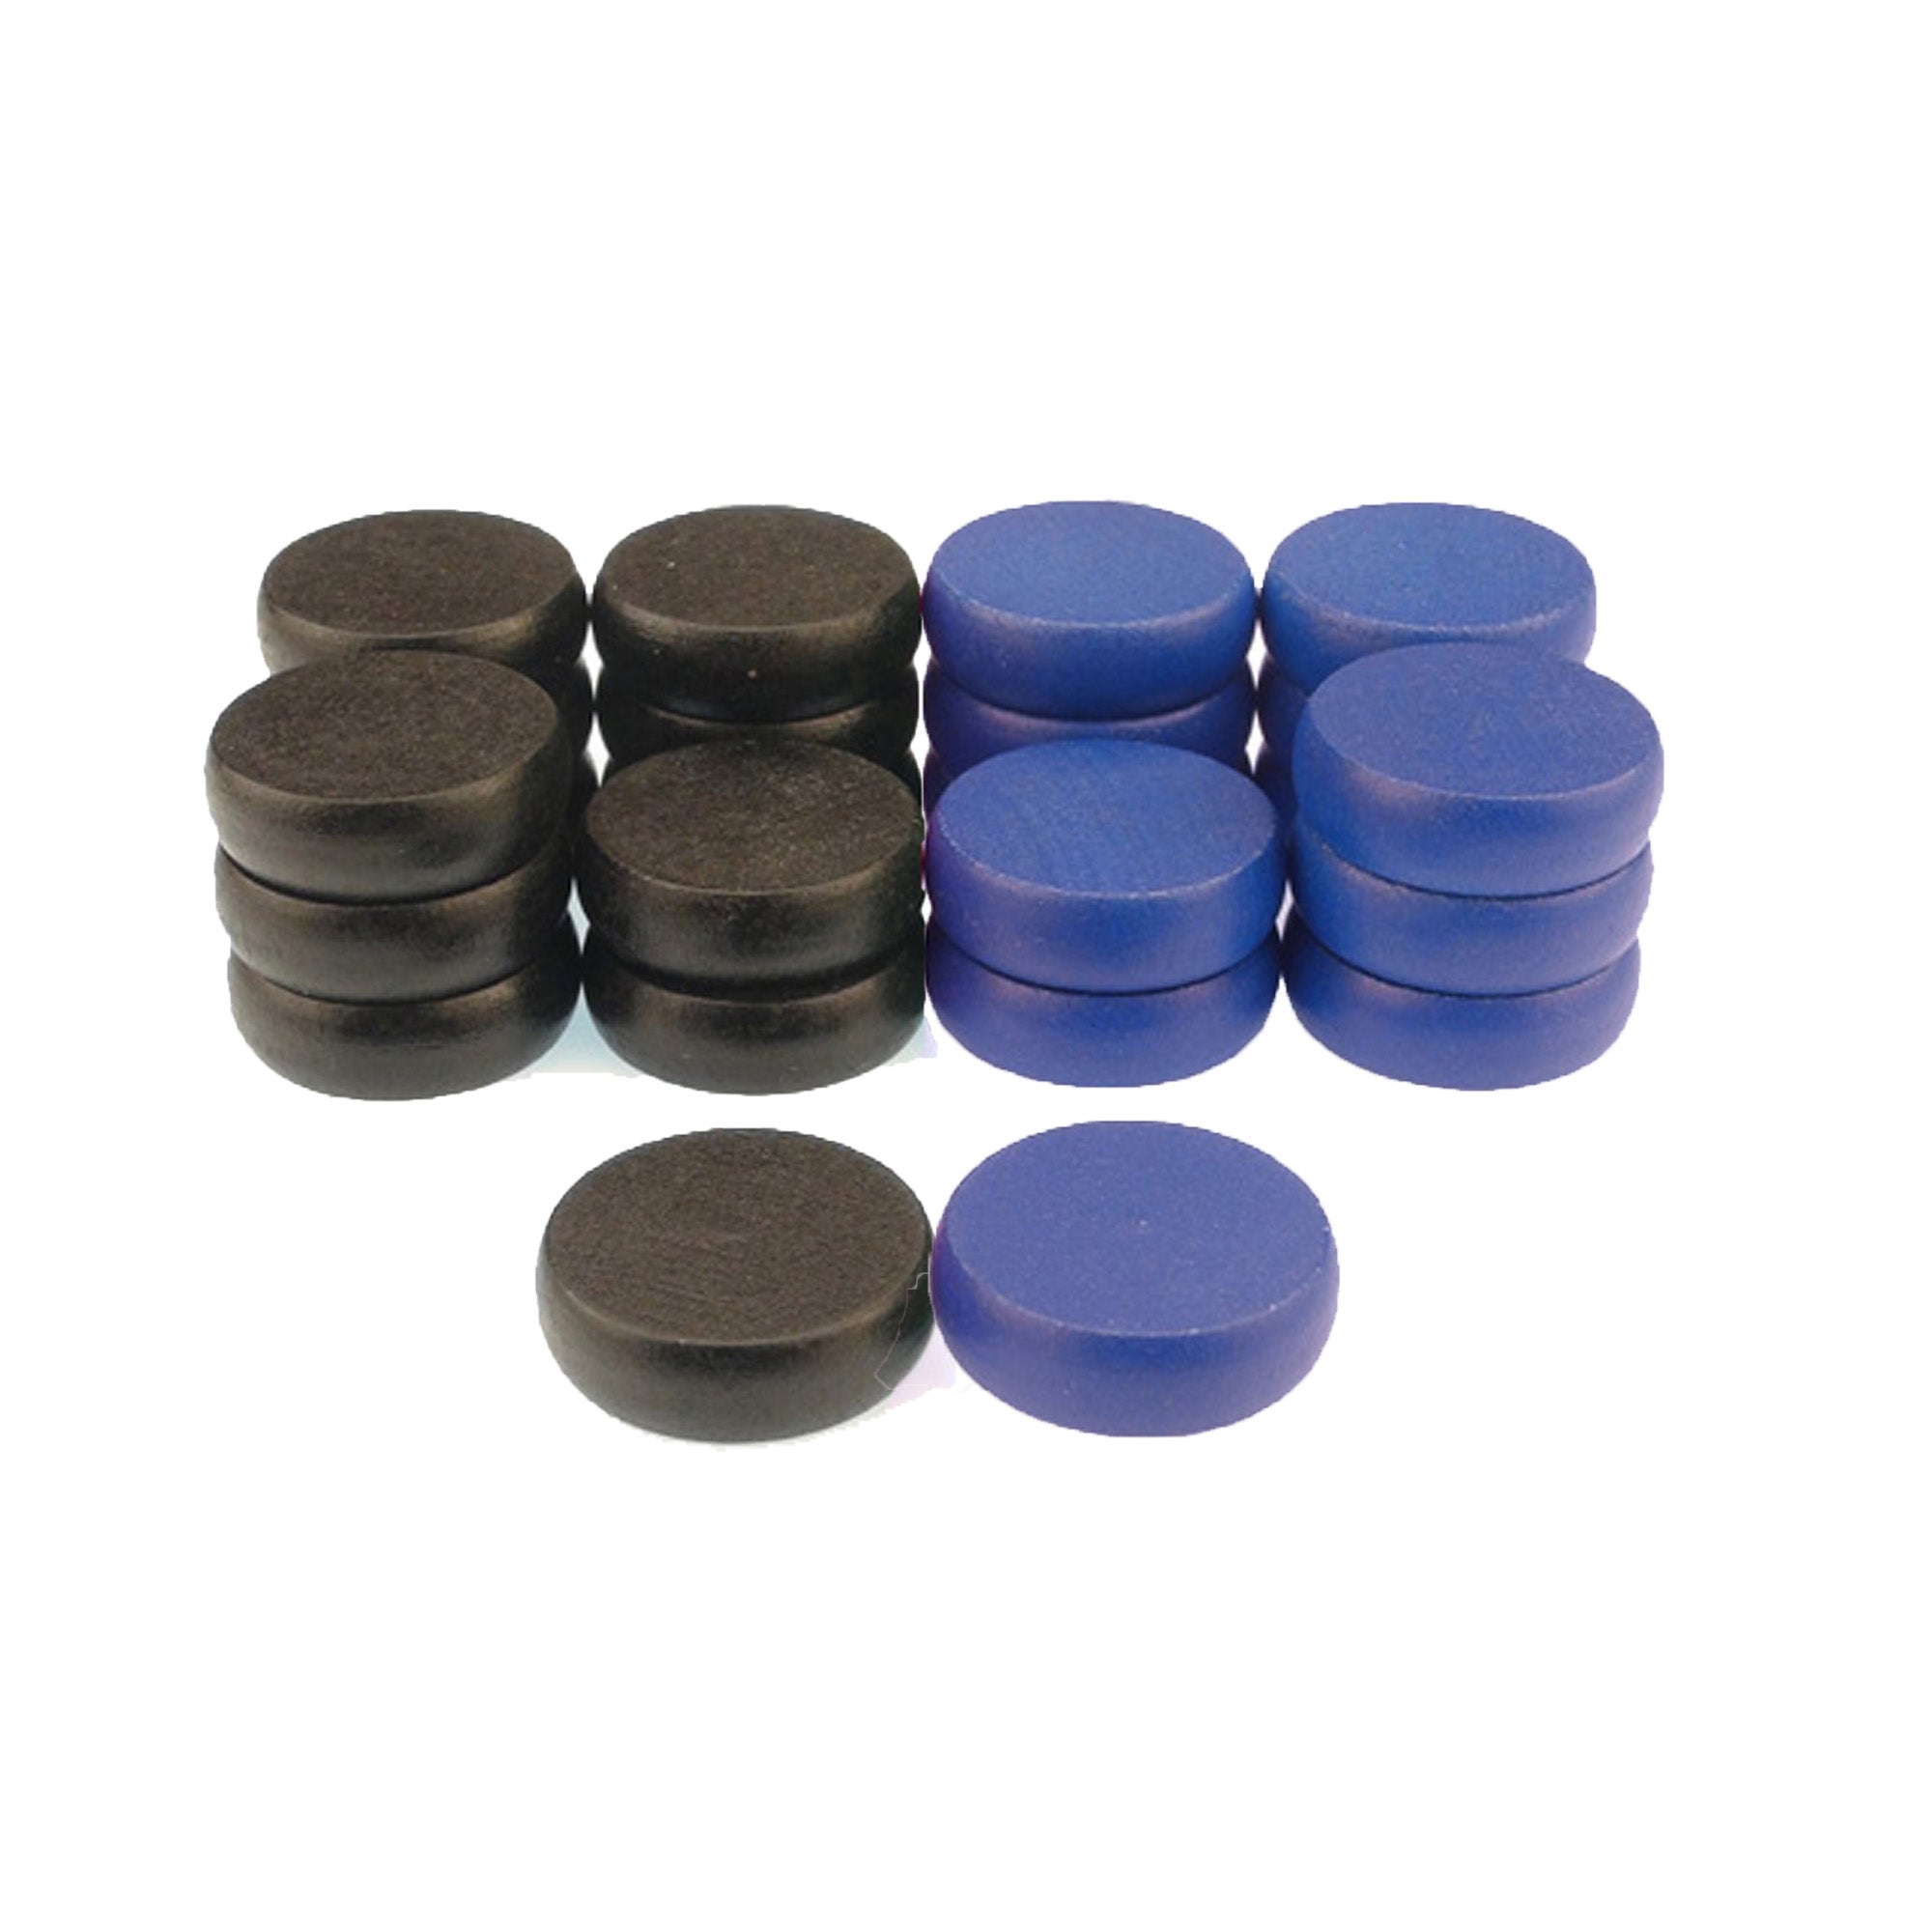 Crokinole Tournament Discs - 13 Black and 13 Blue - Size 1-1/4" - 24 Needed + 2 Spare Discs - Bag Included - Carrom Alternative